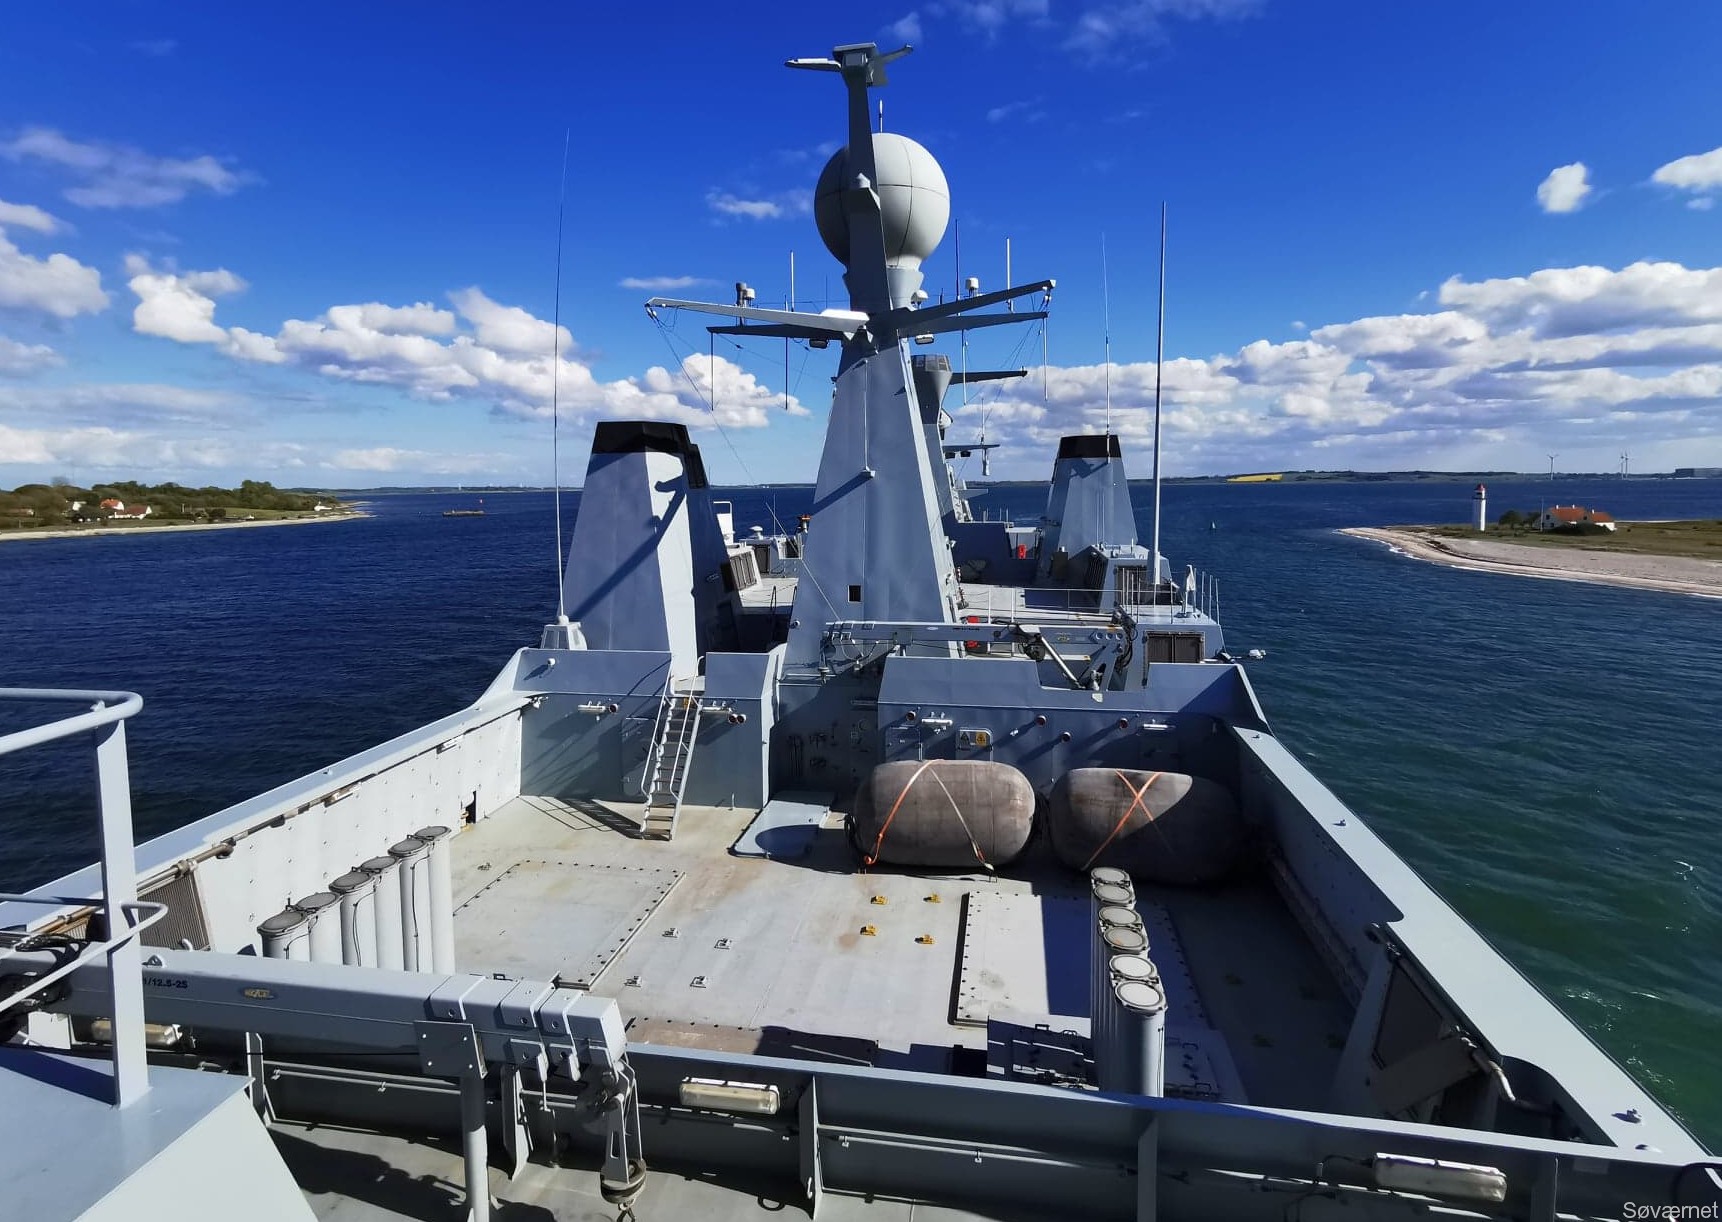 absalon class frigate command support ship royal danish navy 105x stanflex weapons deck space